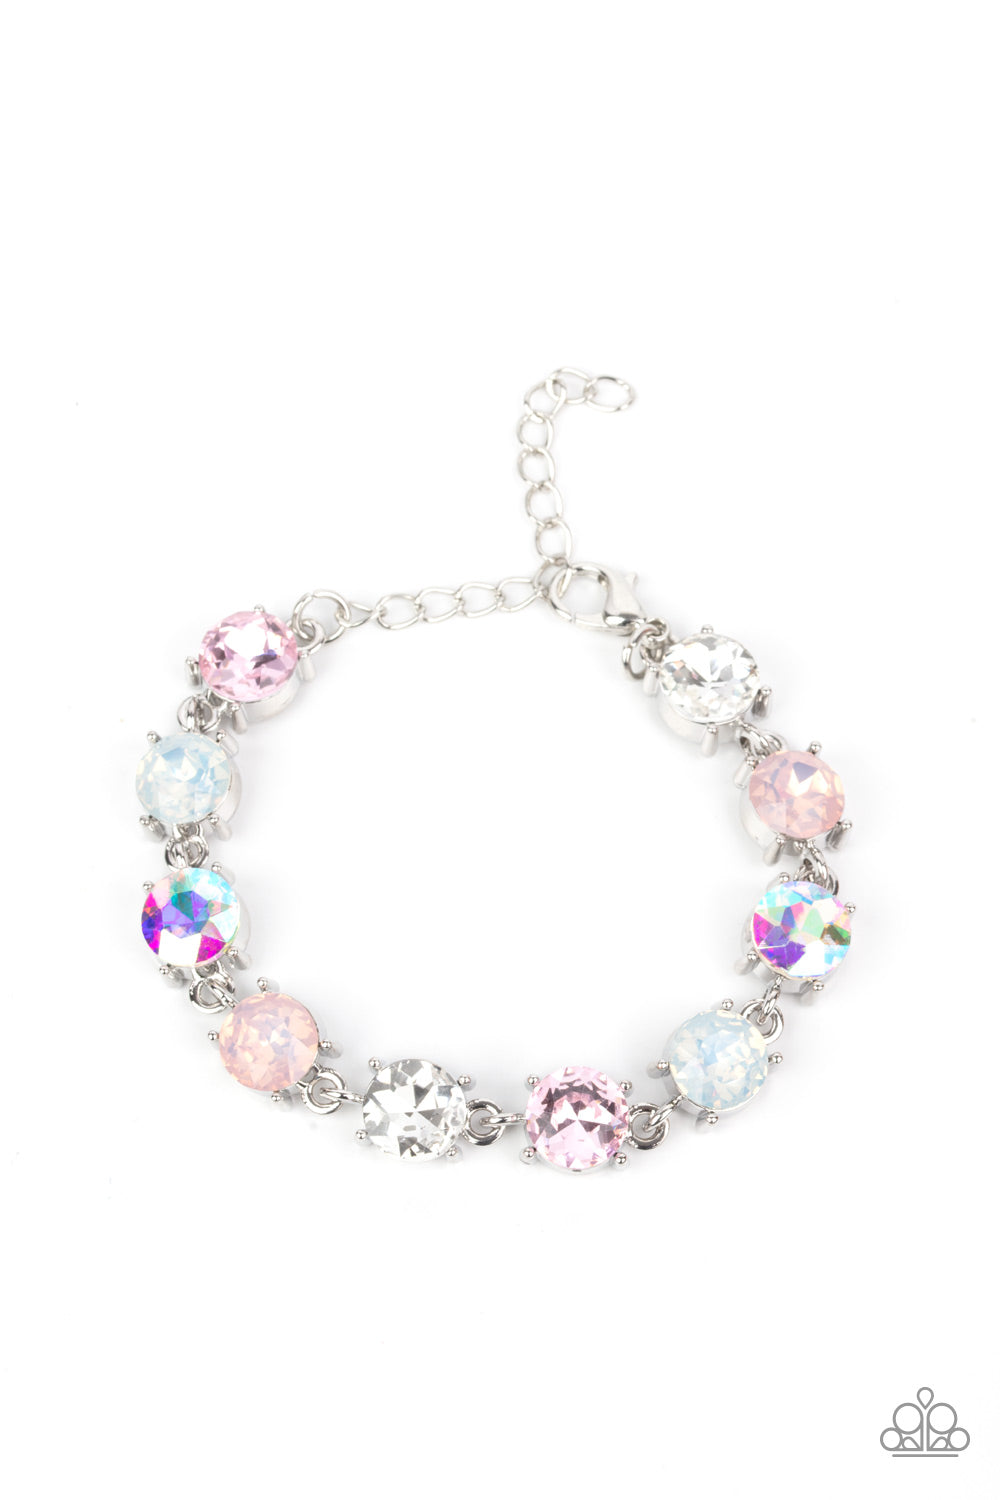 Celestial Couture Pink Bracelet